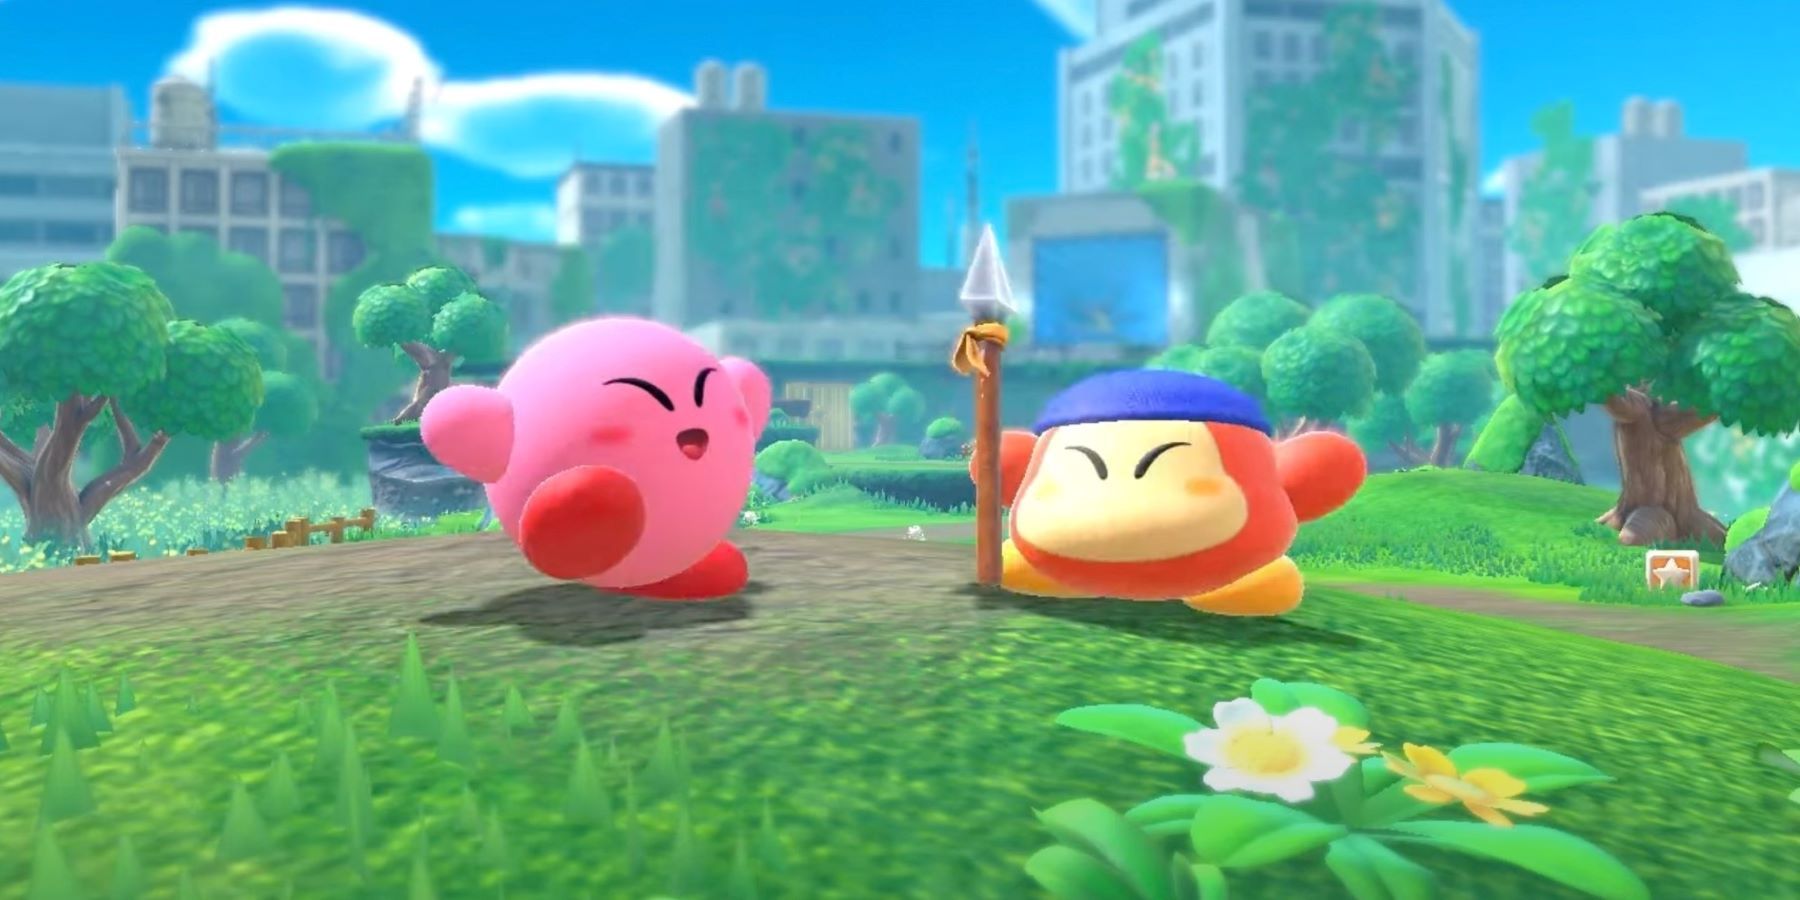 Кирби и Бандана Уоддл Ди весело выглядят вместе в Kirby and the Forgotten Land